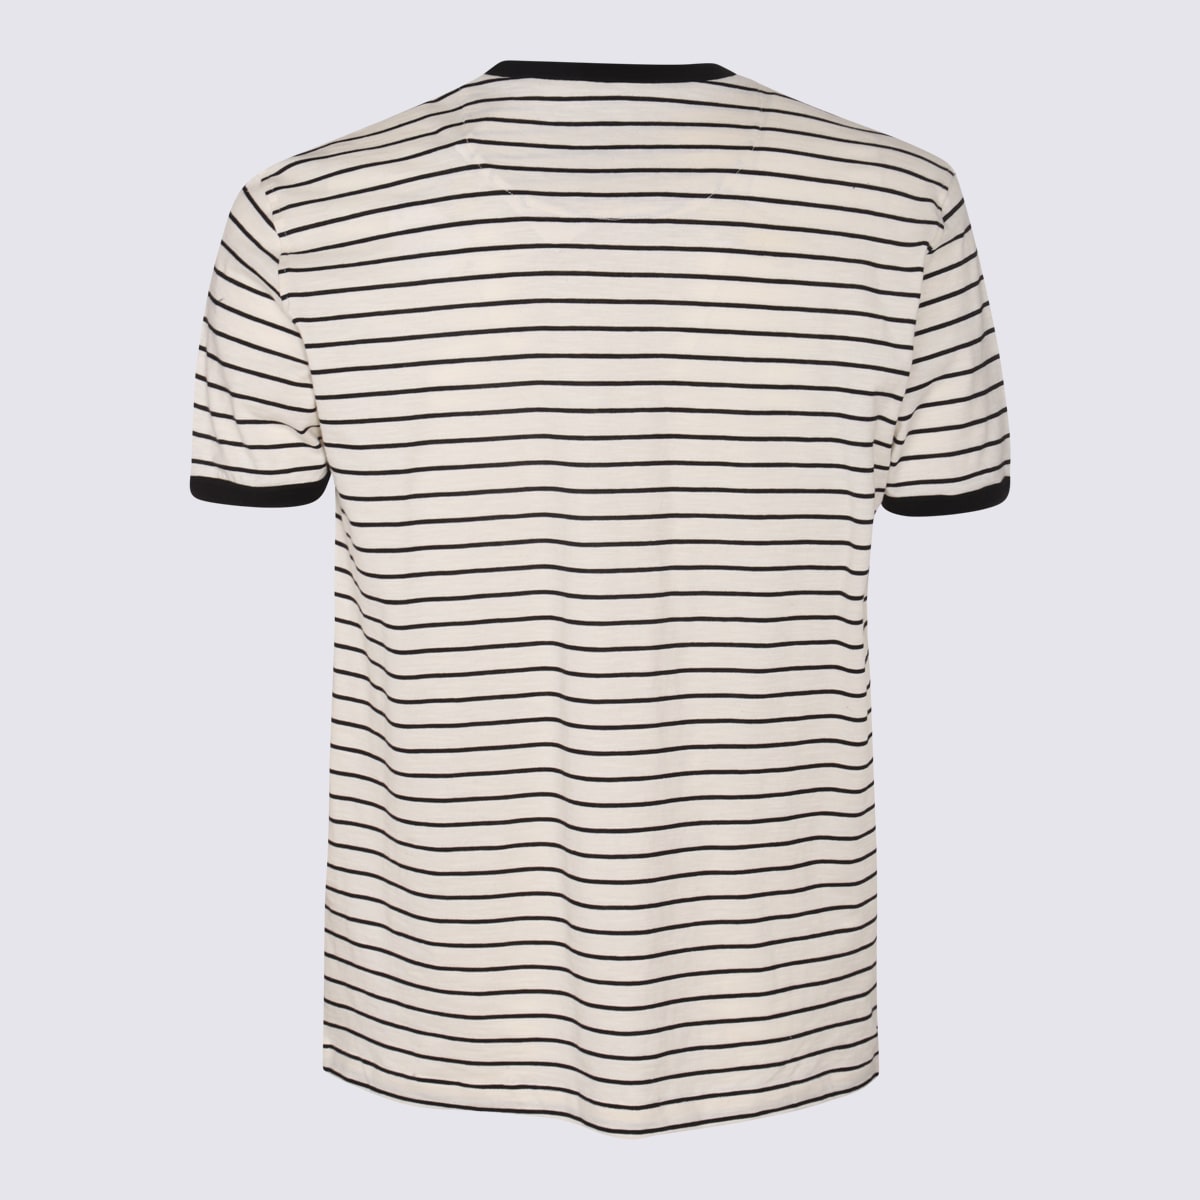 Black And White Cotton Stripe T-shirt